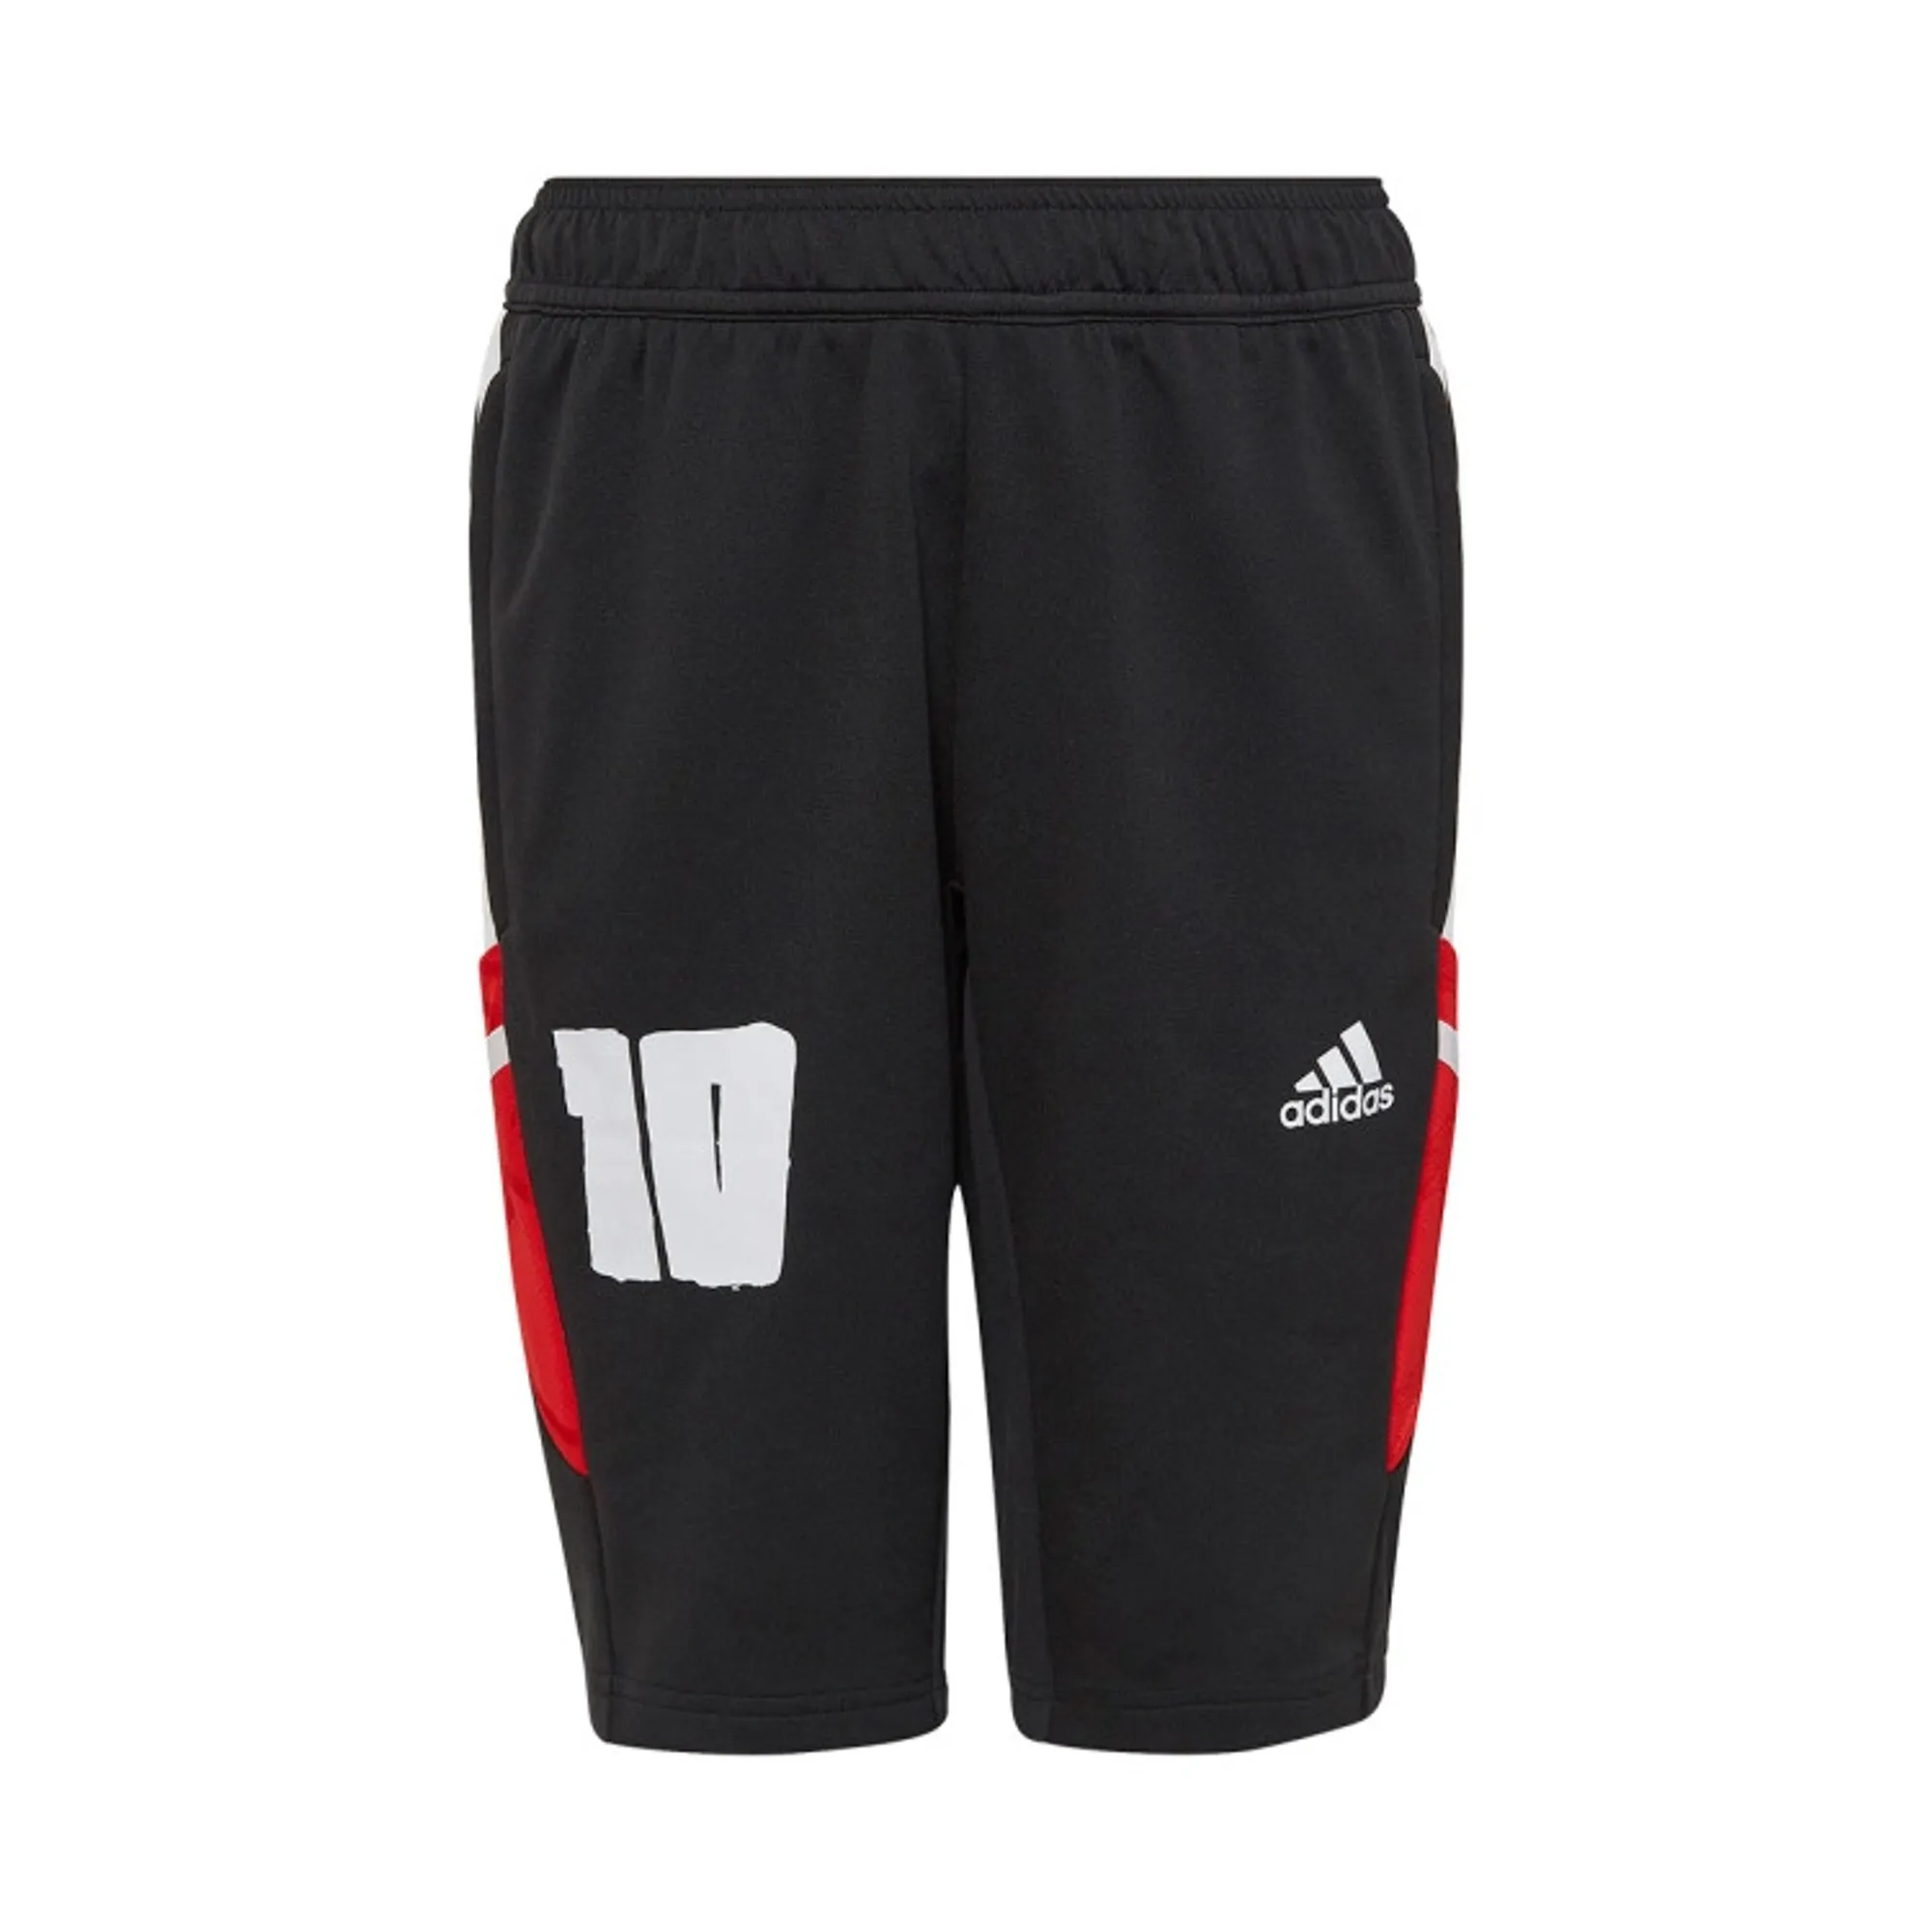 adidas Performance MESSI 1/2 PANT - Sports shorts - black - Zalando.de